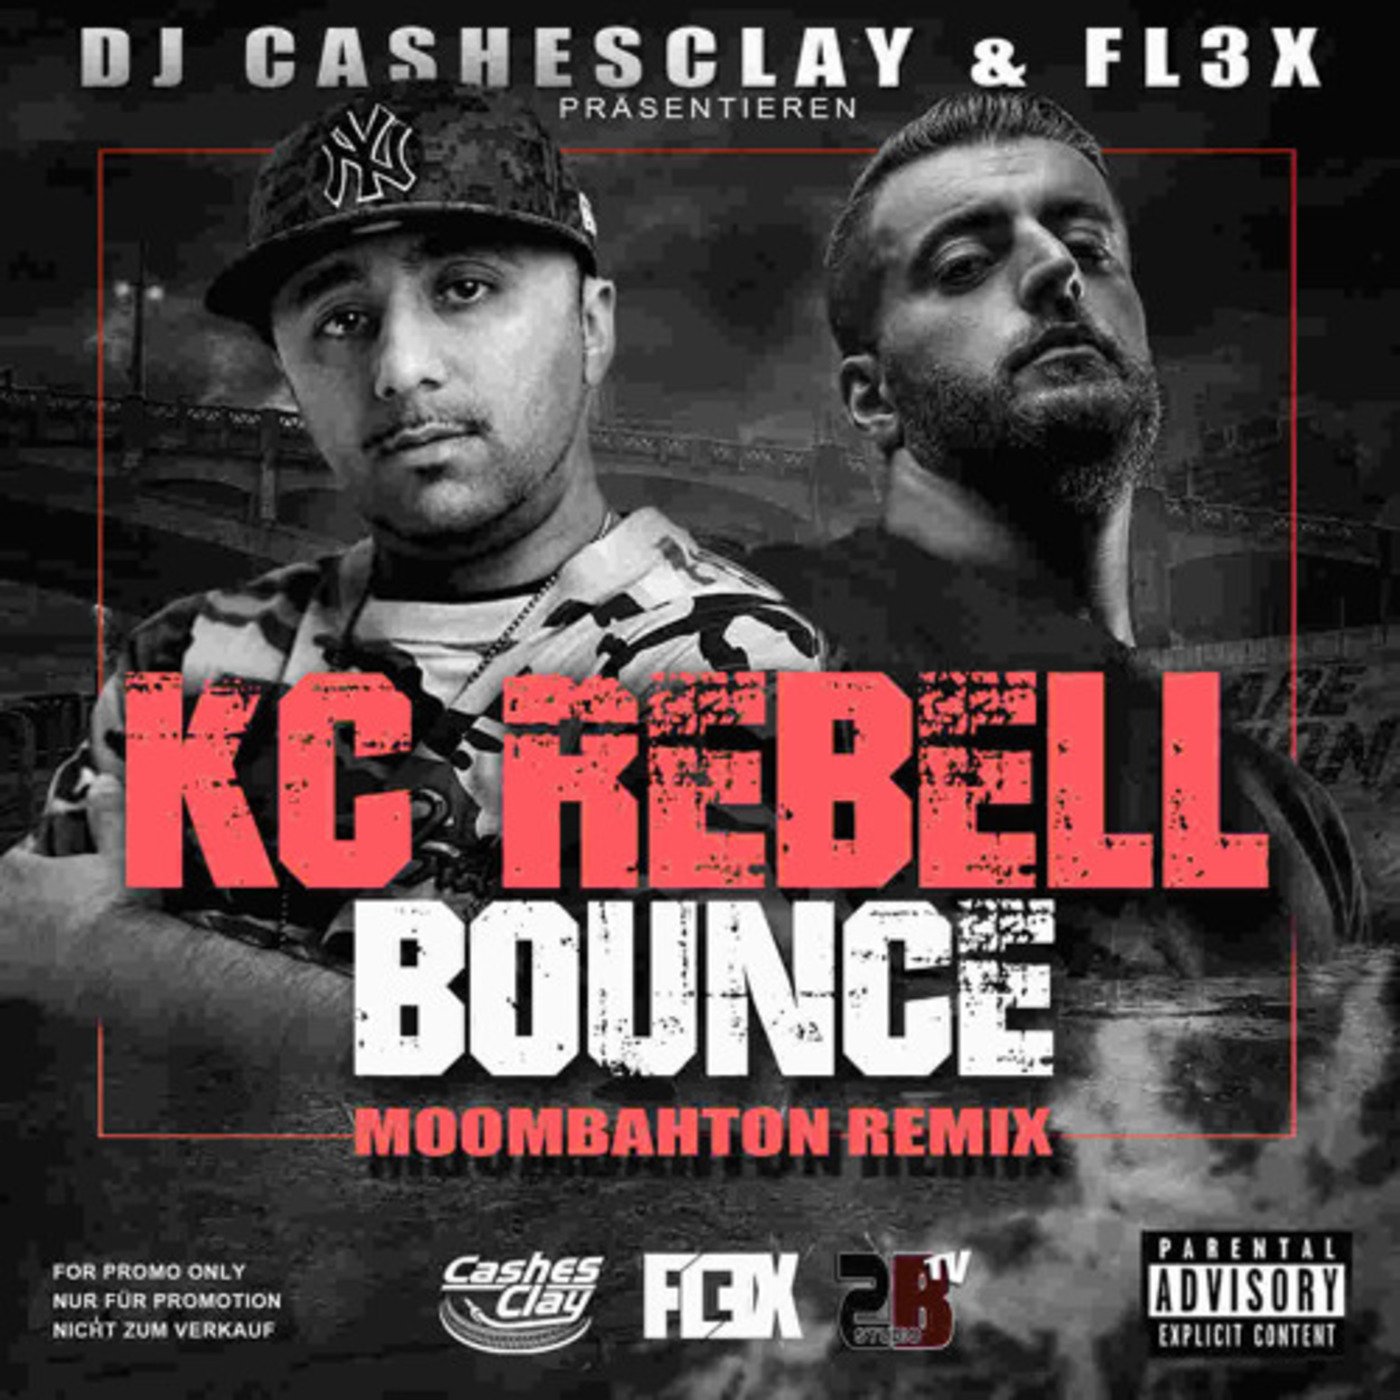 KC REBELL - BOUNCE (DJ CASHESCLAY & FL3X MOOMBAHTON REMIX )